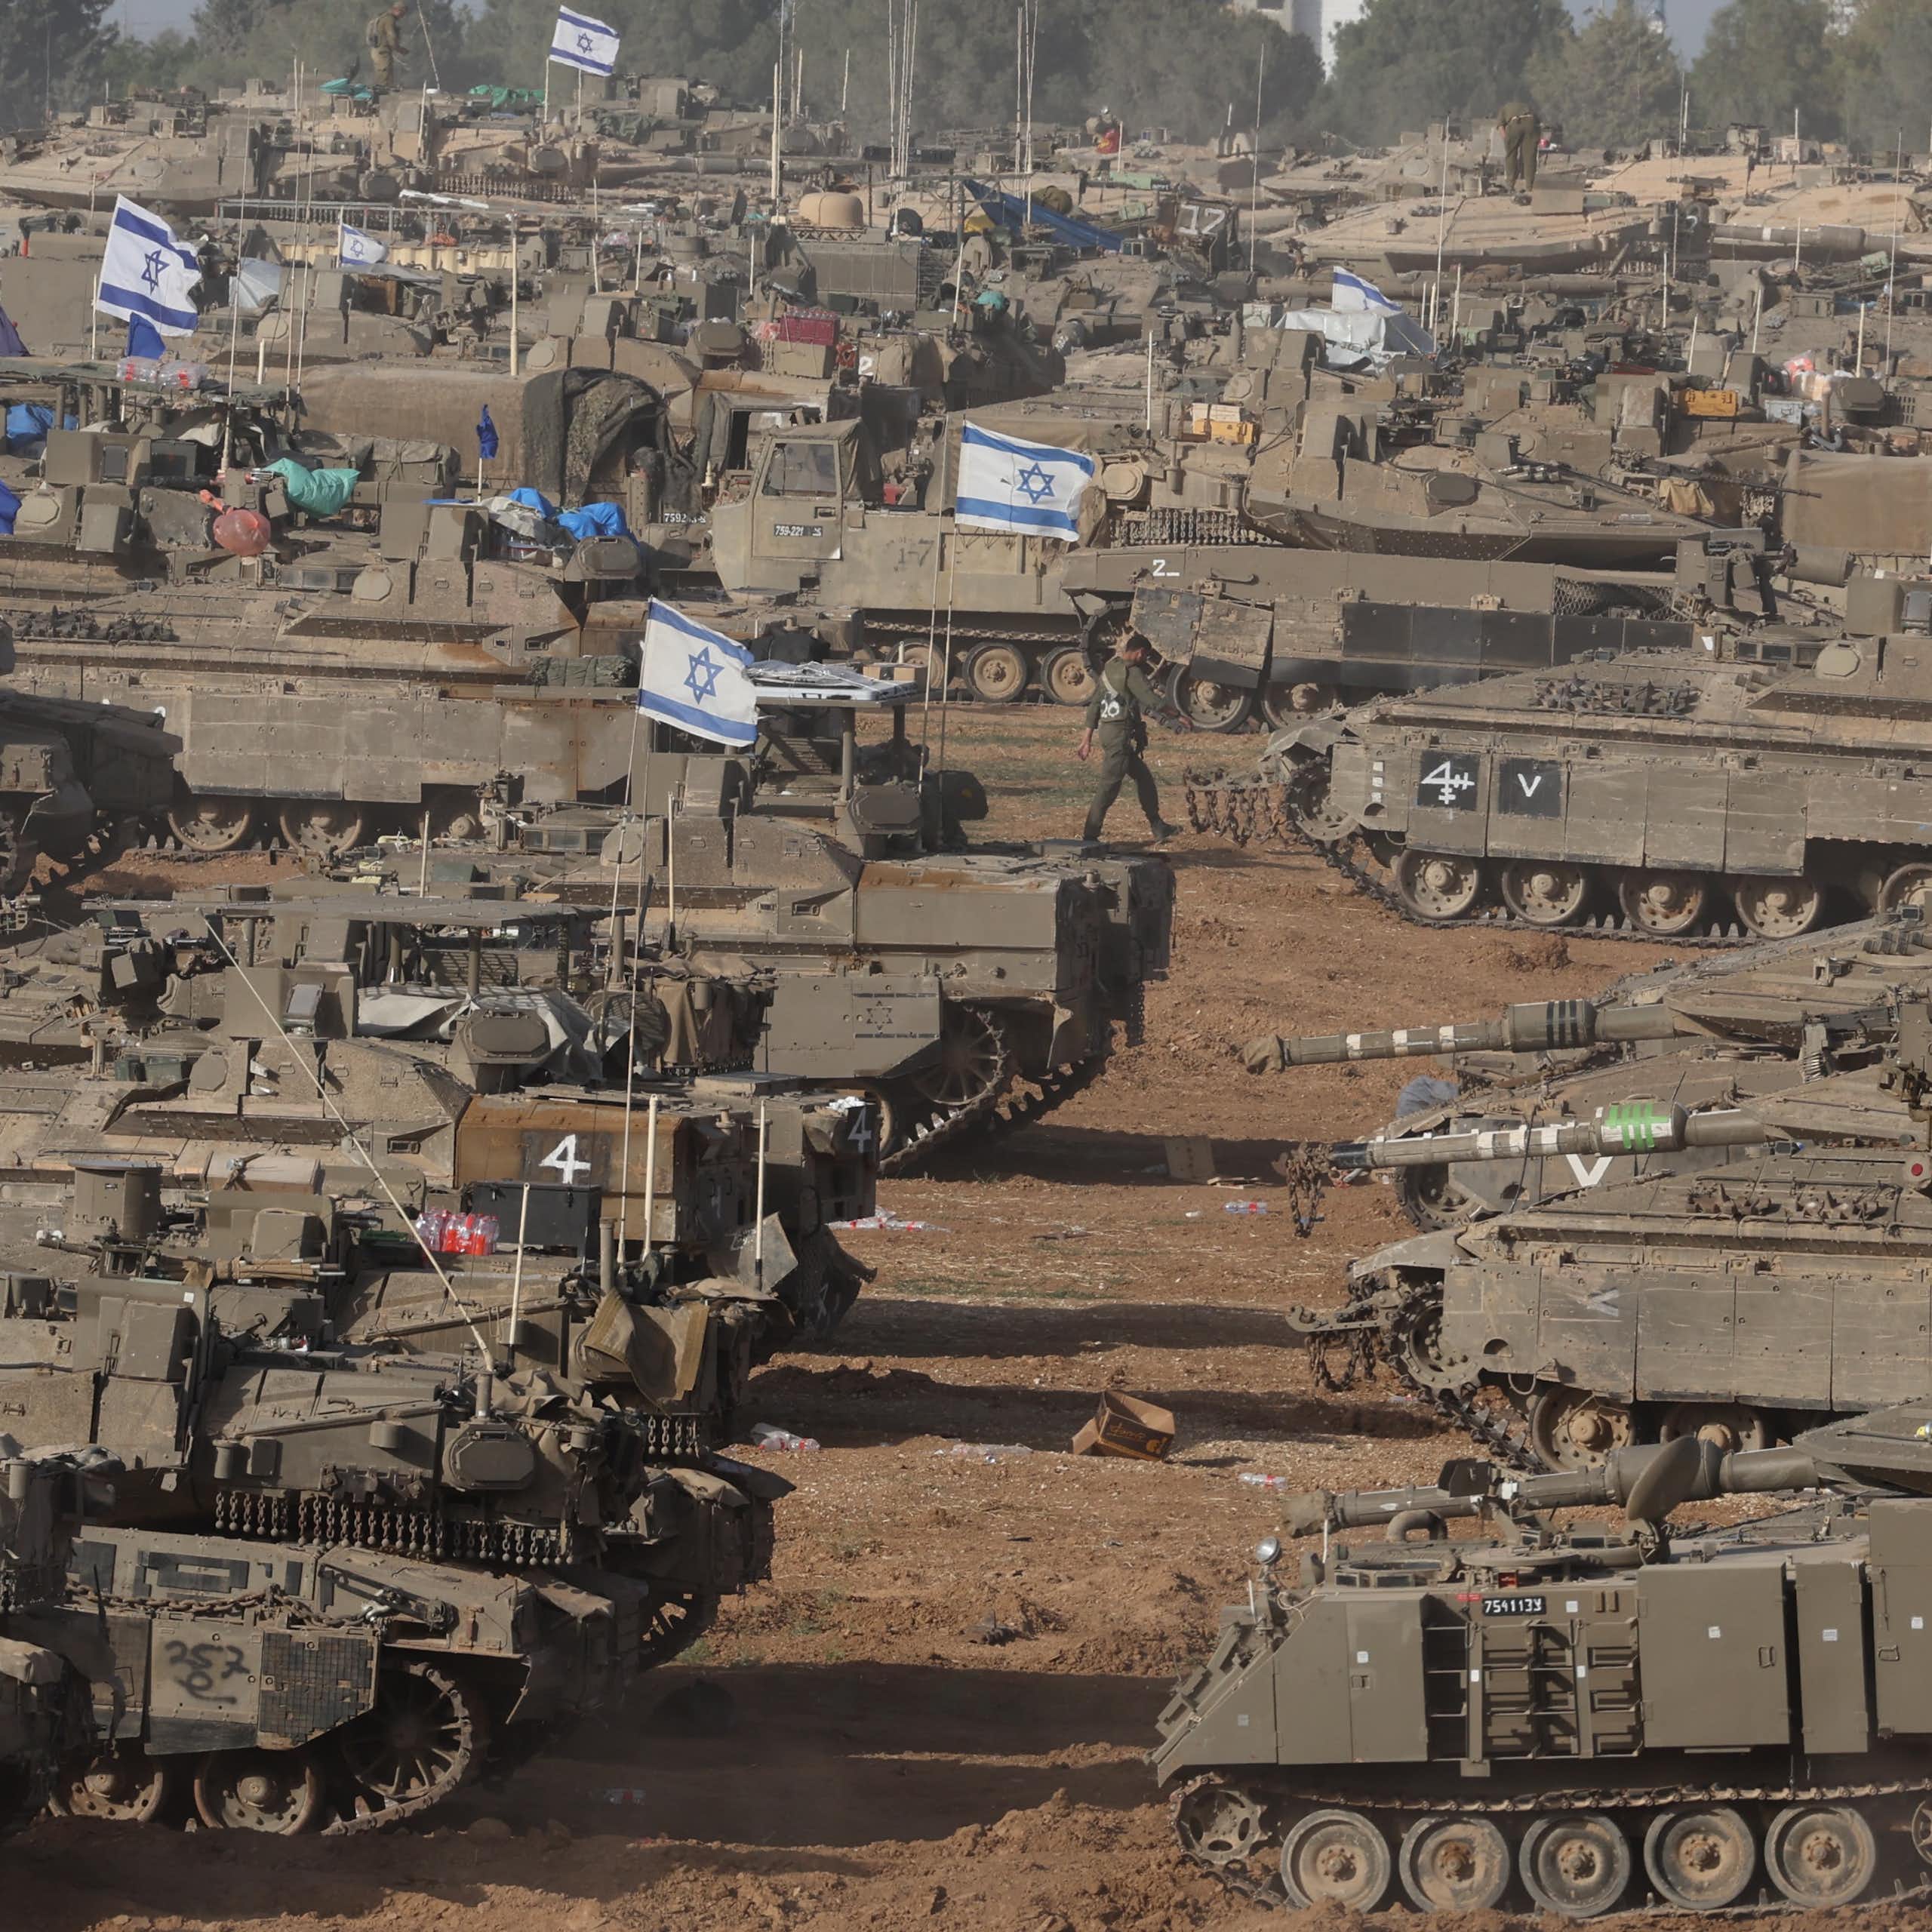 Israeli tanks gathered on a sandy patch of land.